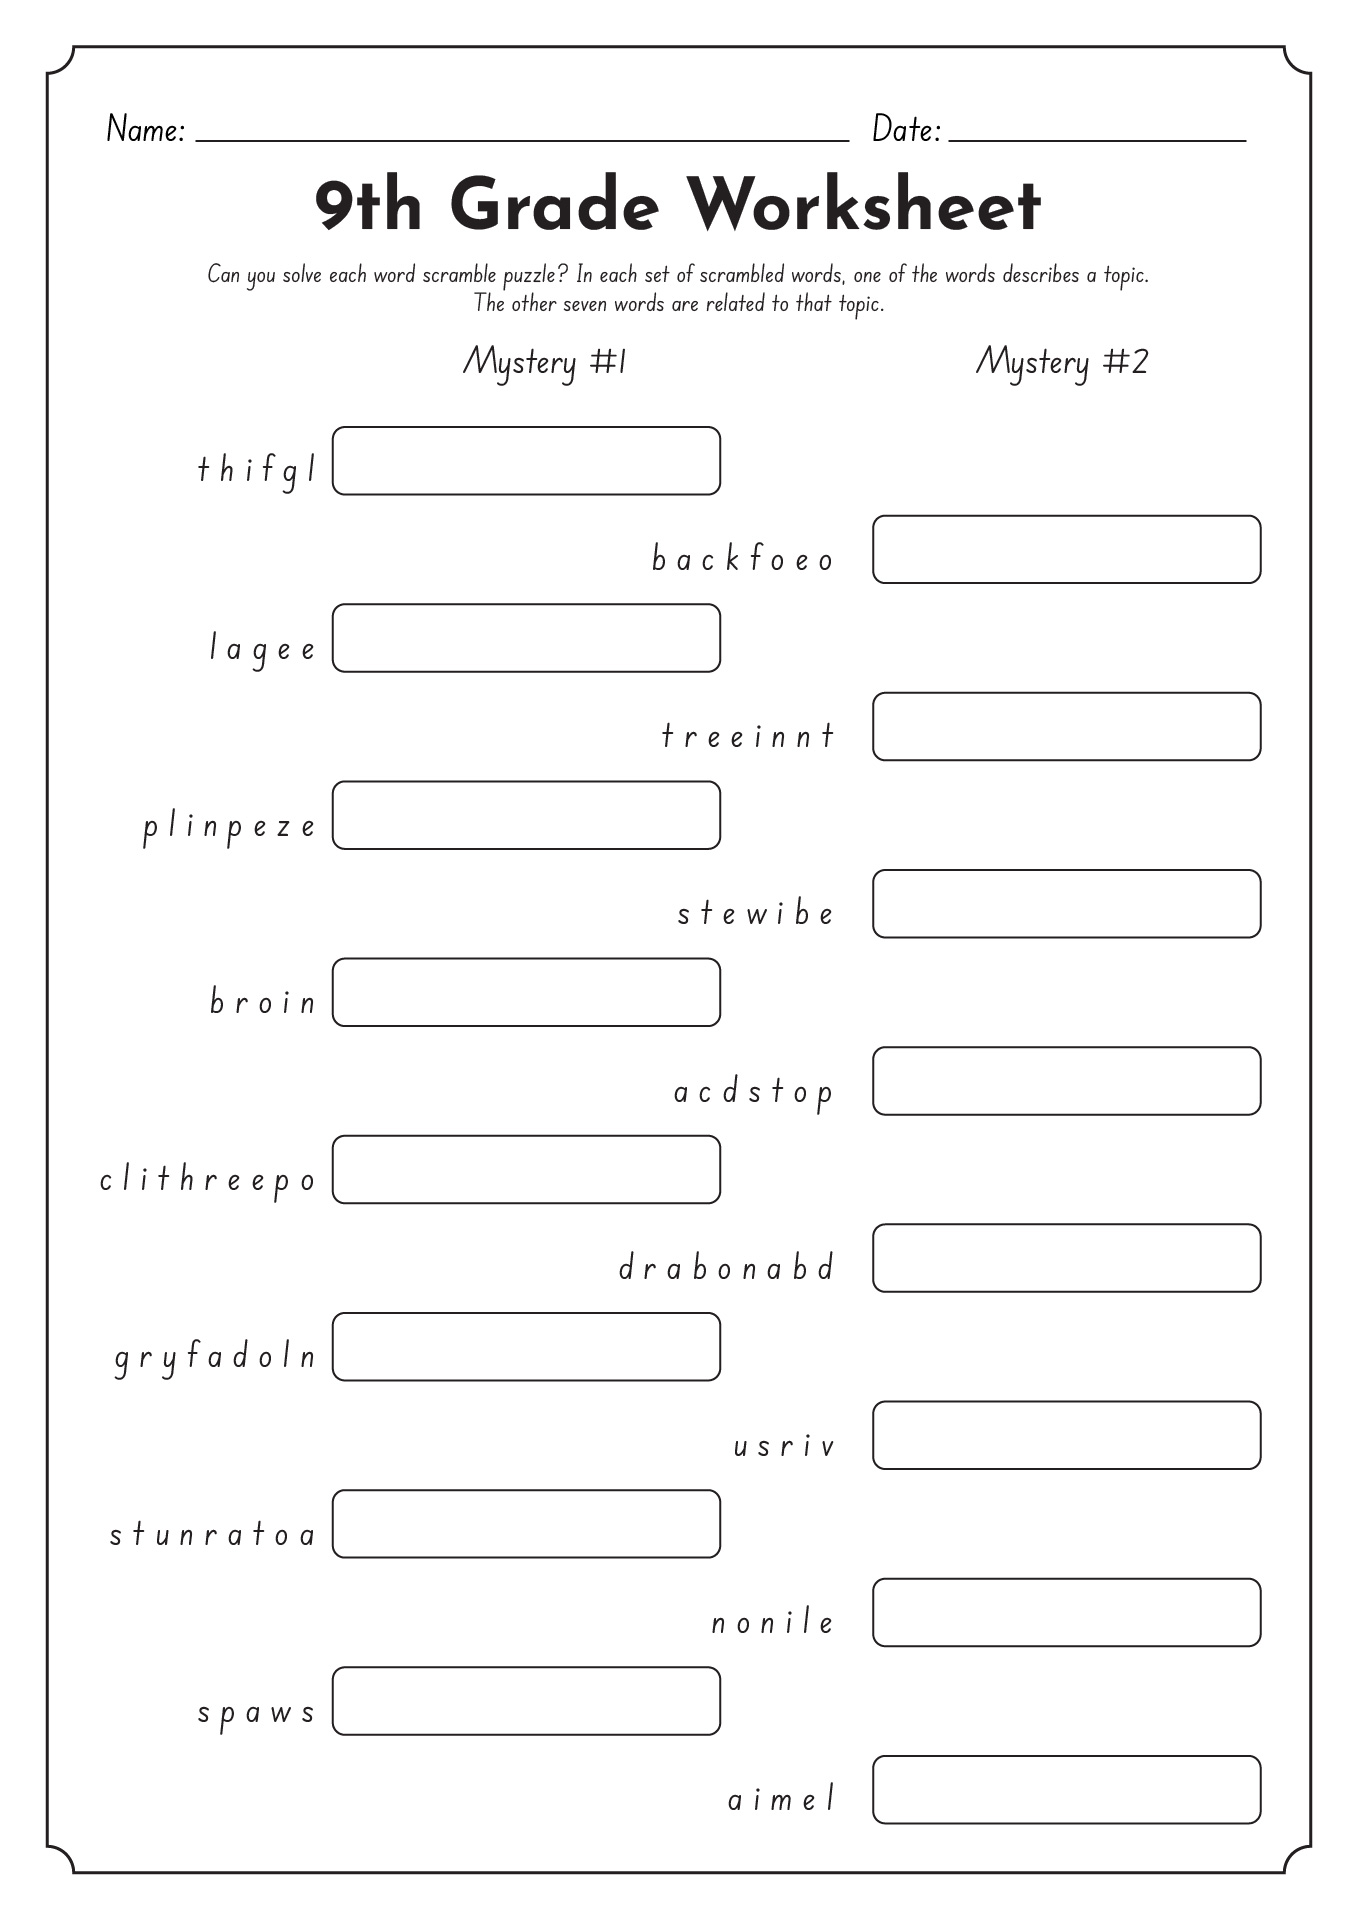 14 Images of 9th Grade Language Arts Worksheets